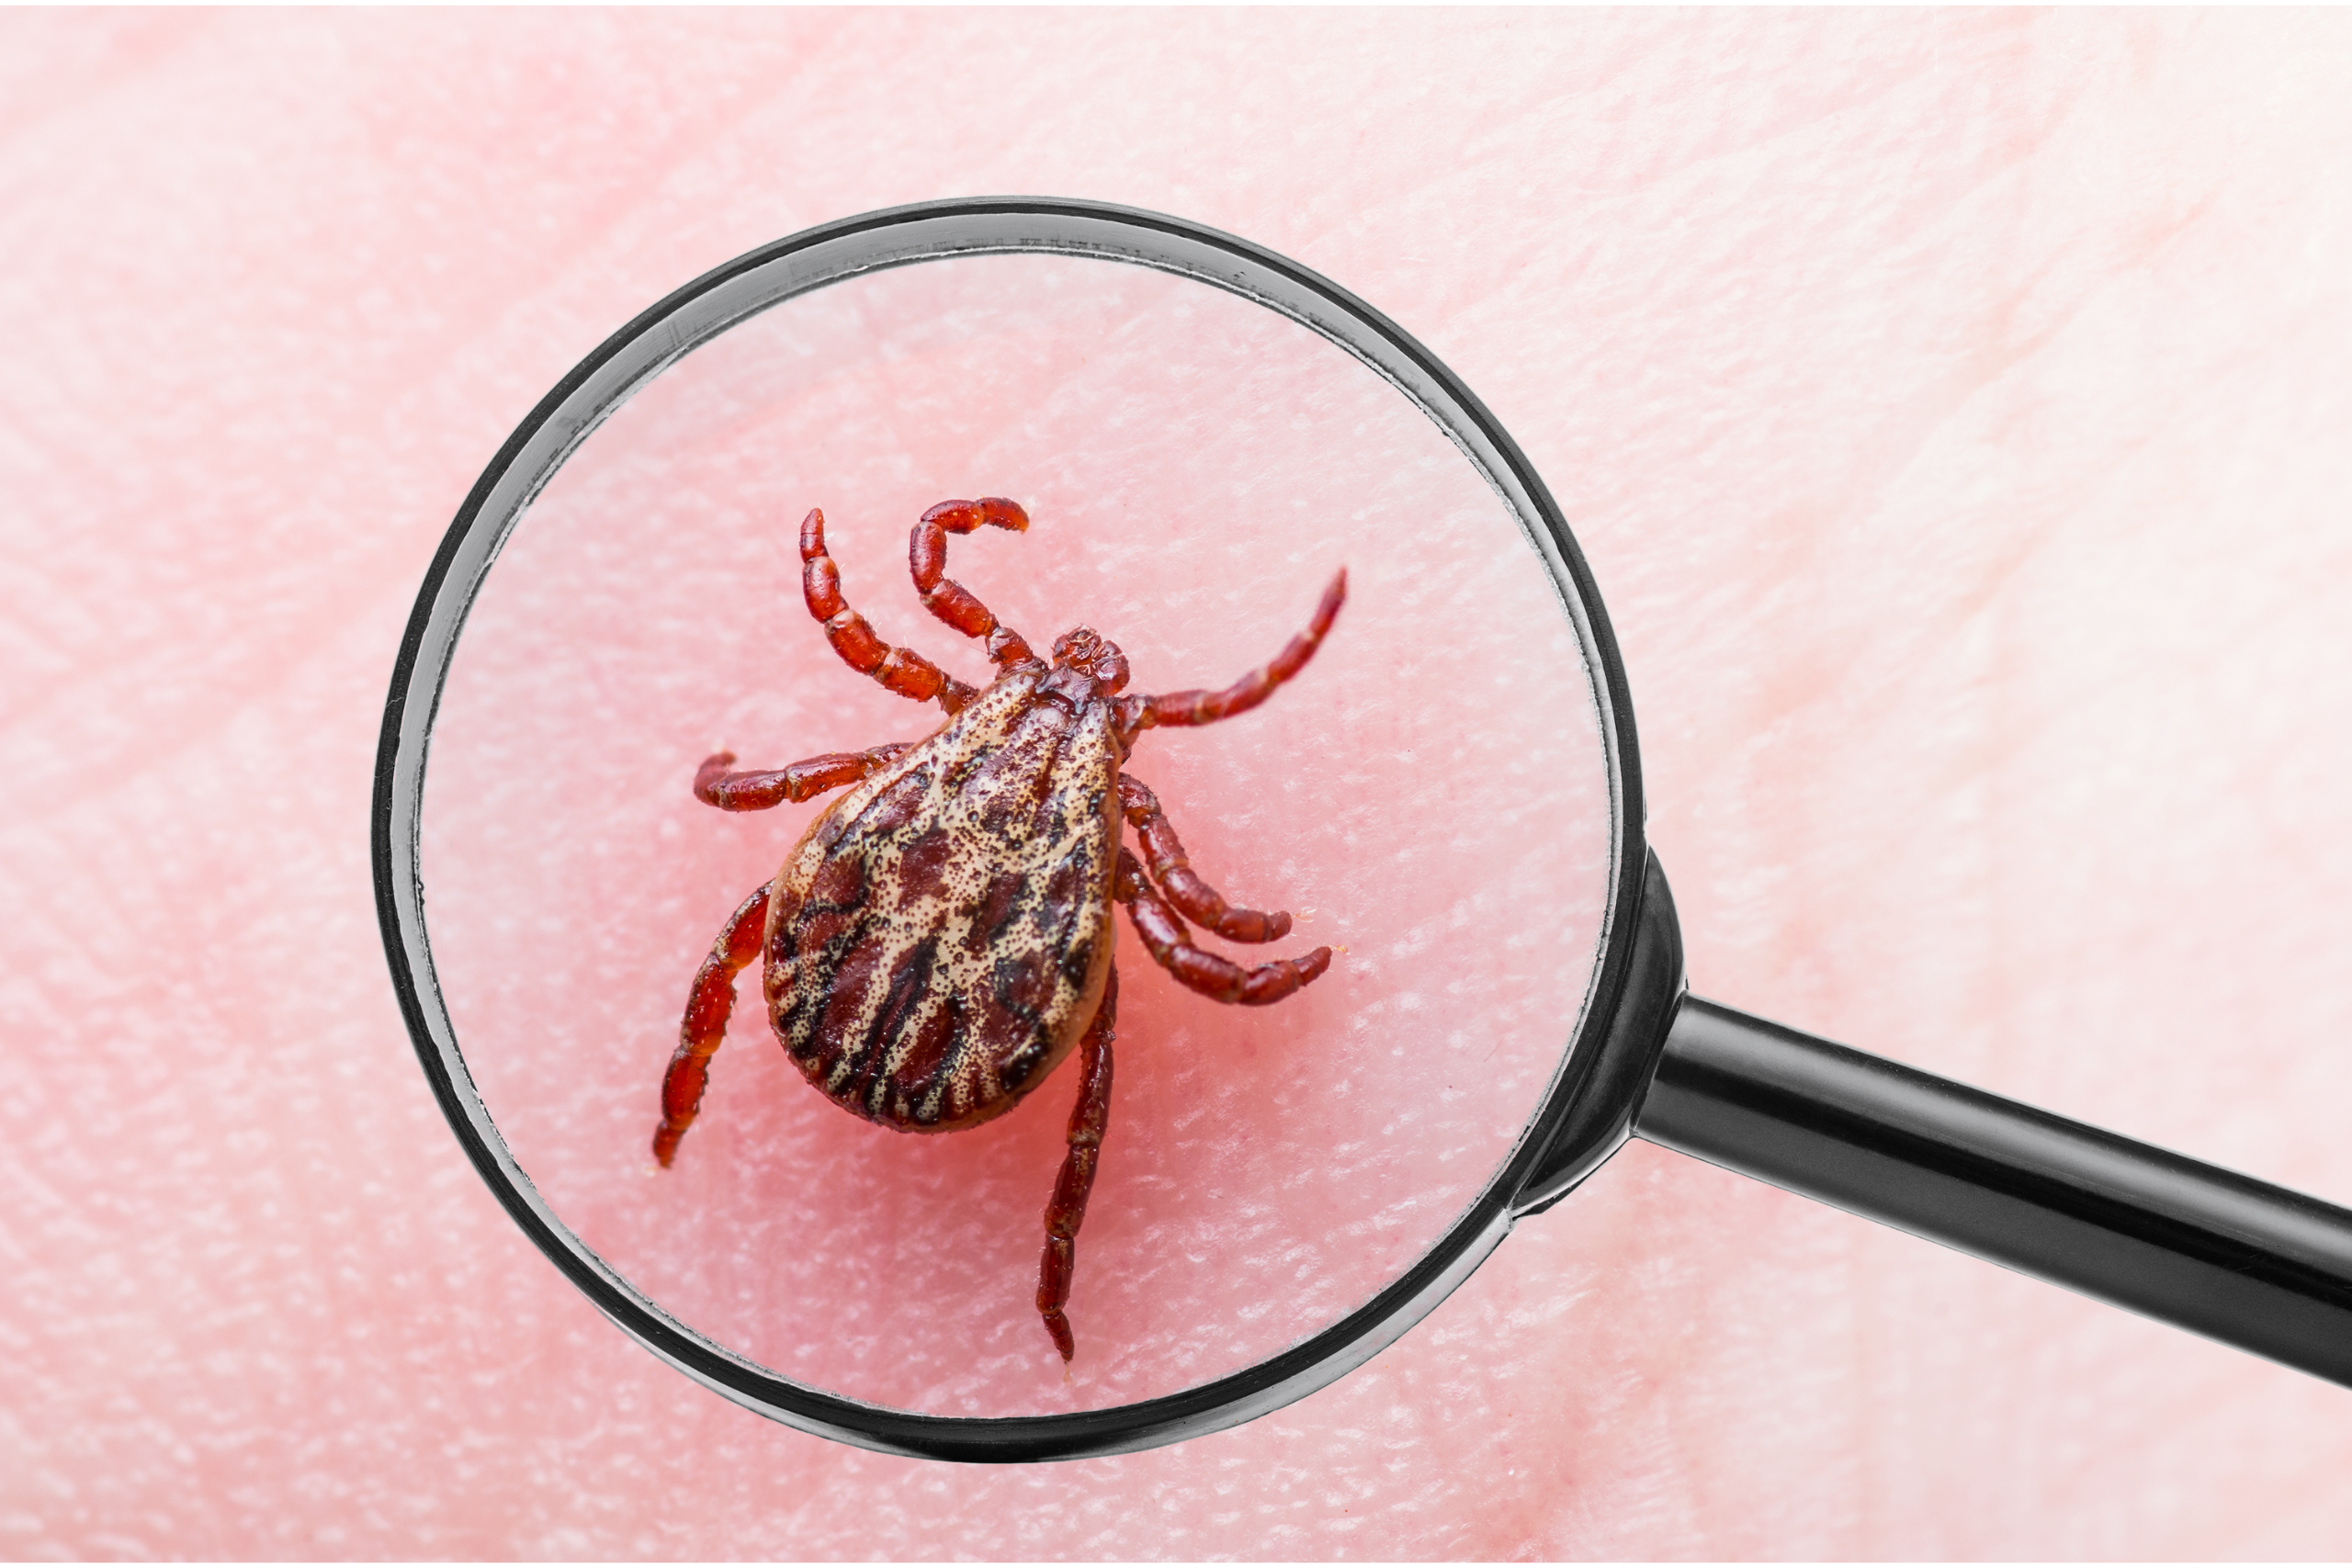 Increased awareness needed on dangers posed by ticks and Lyme Disease – Stanton